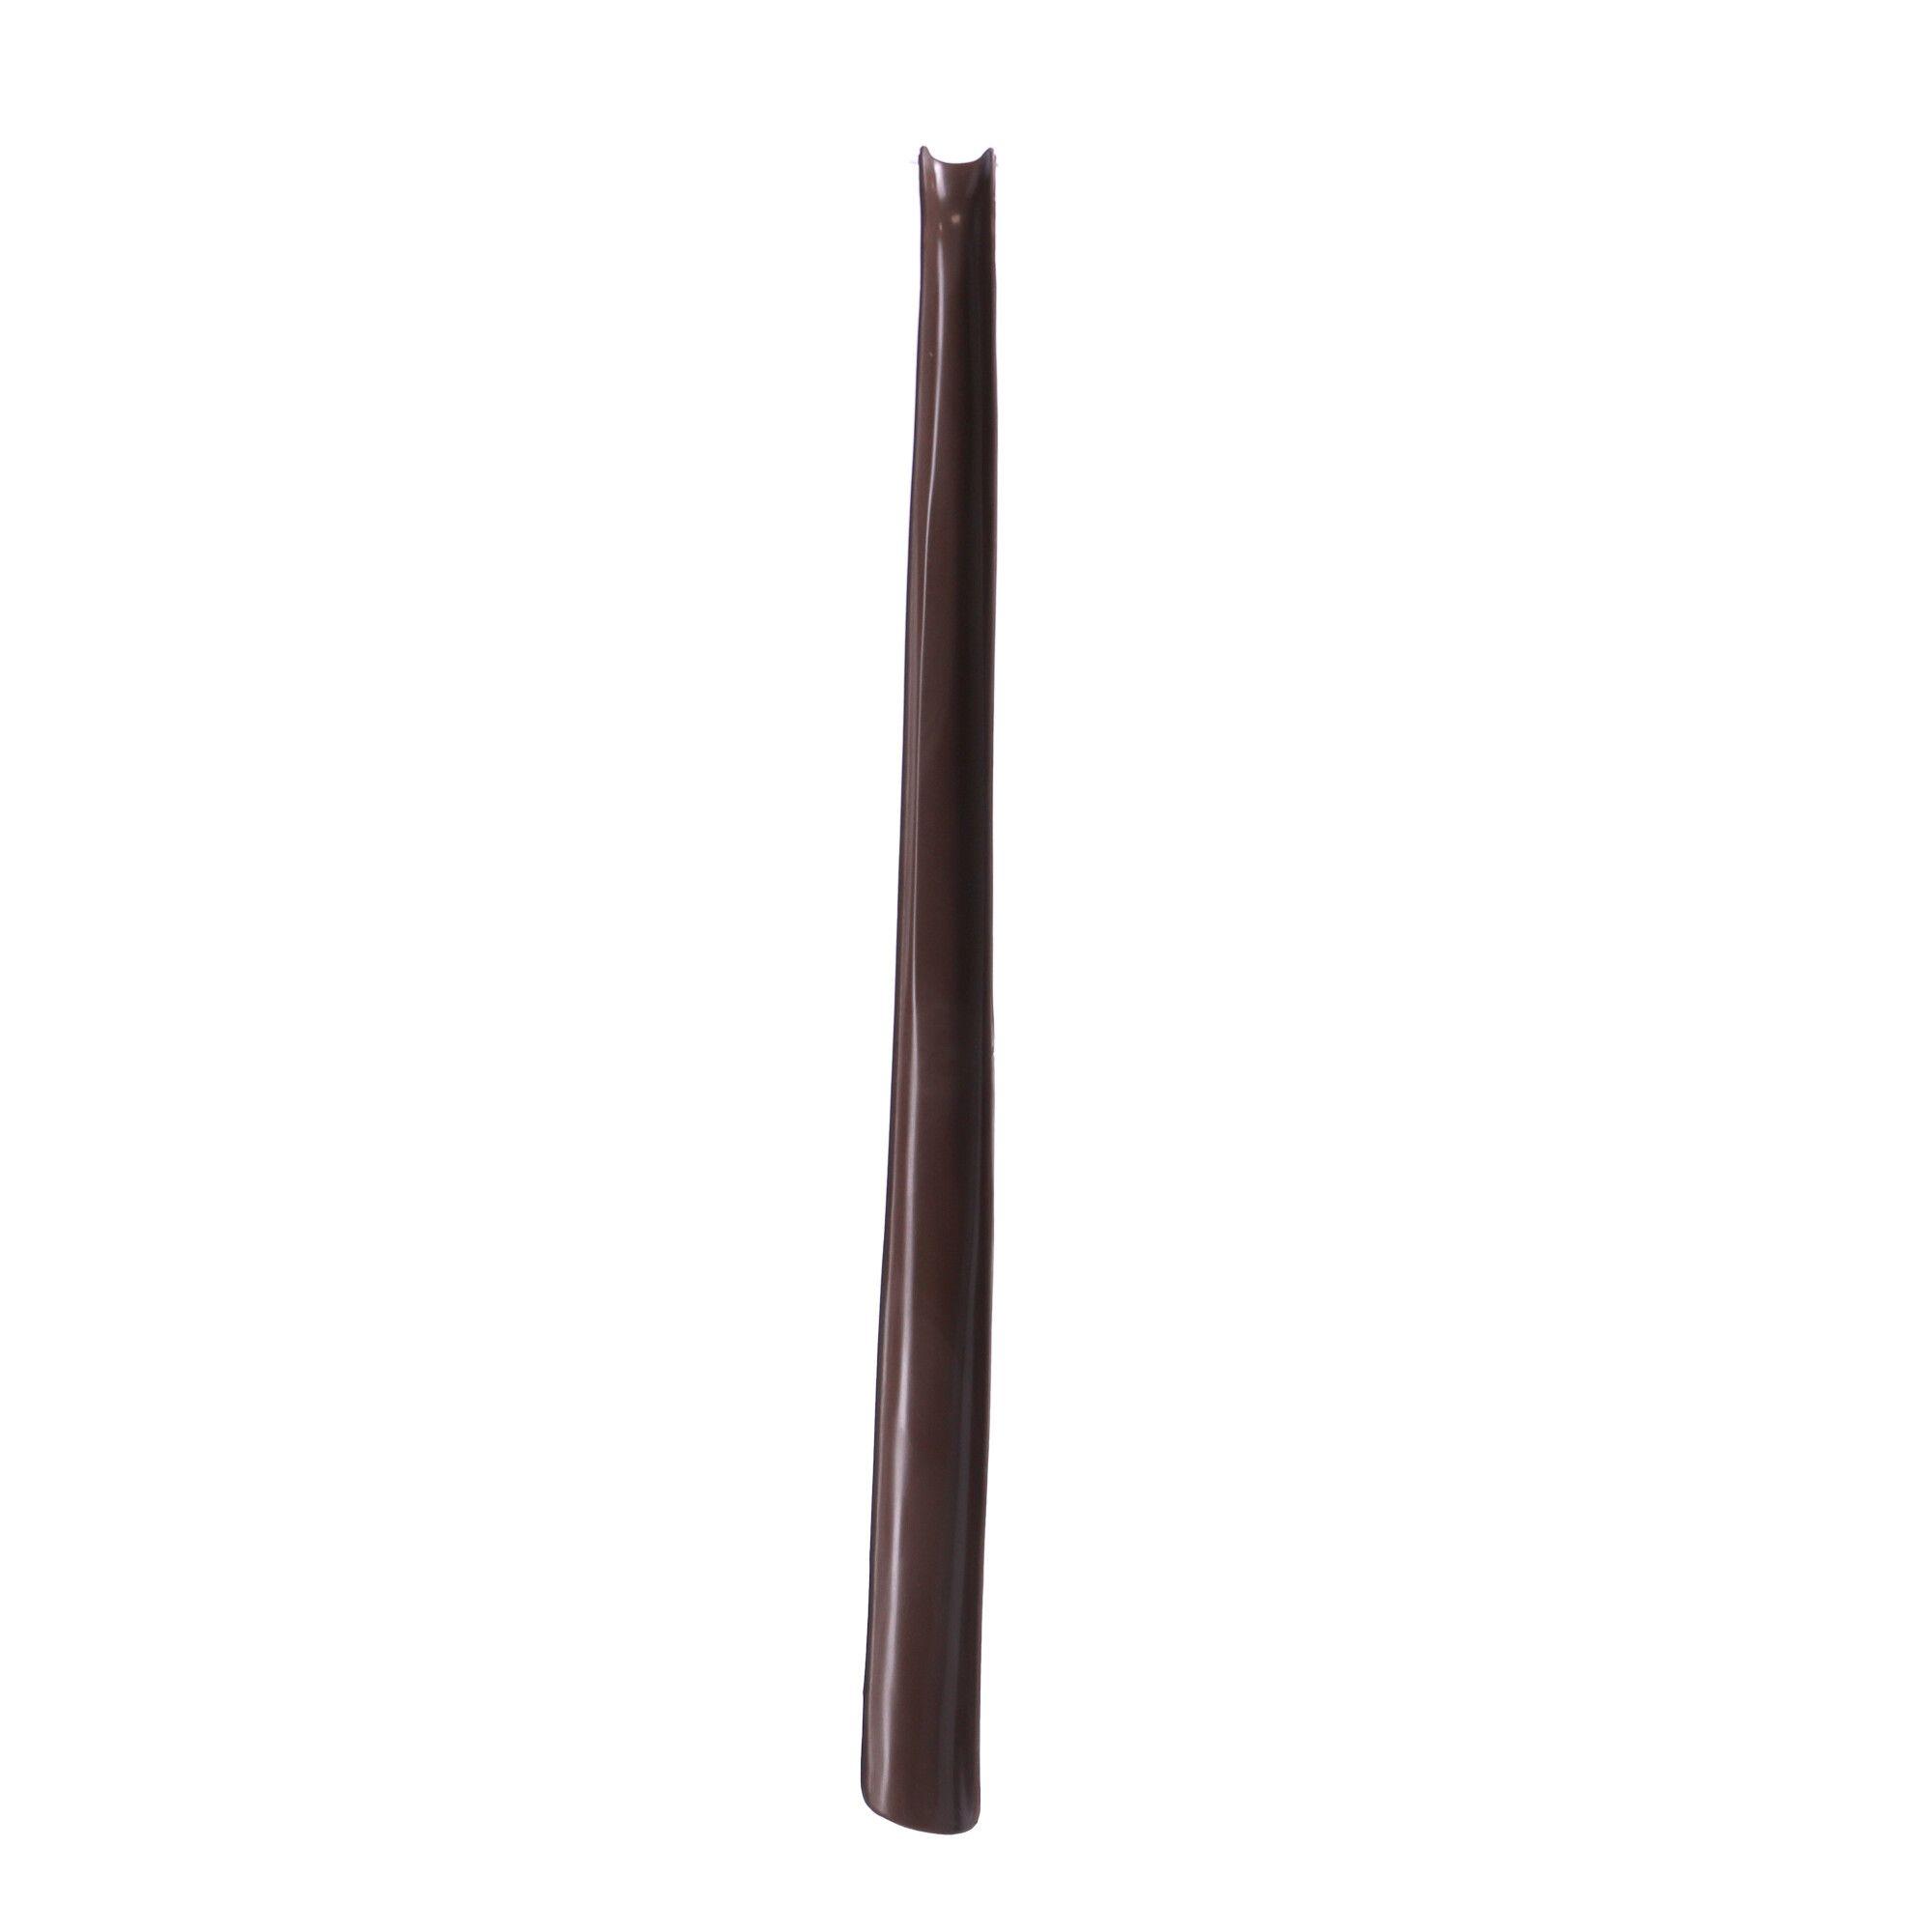 Shoehorn B001 long made of polypropylene - brown